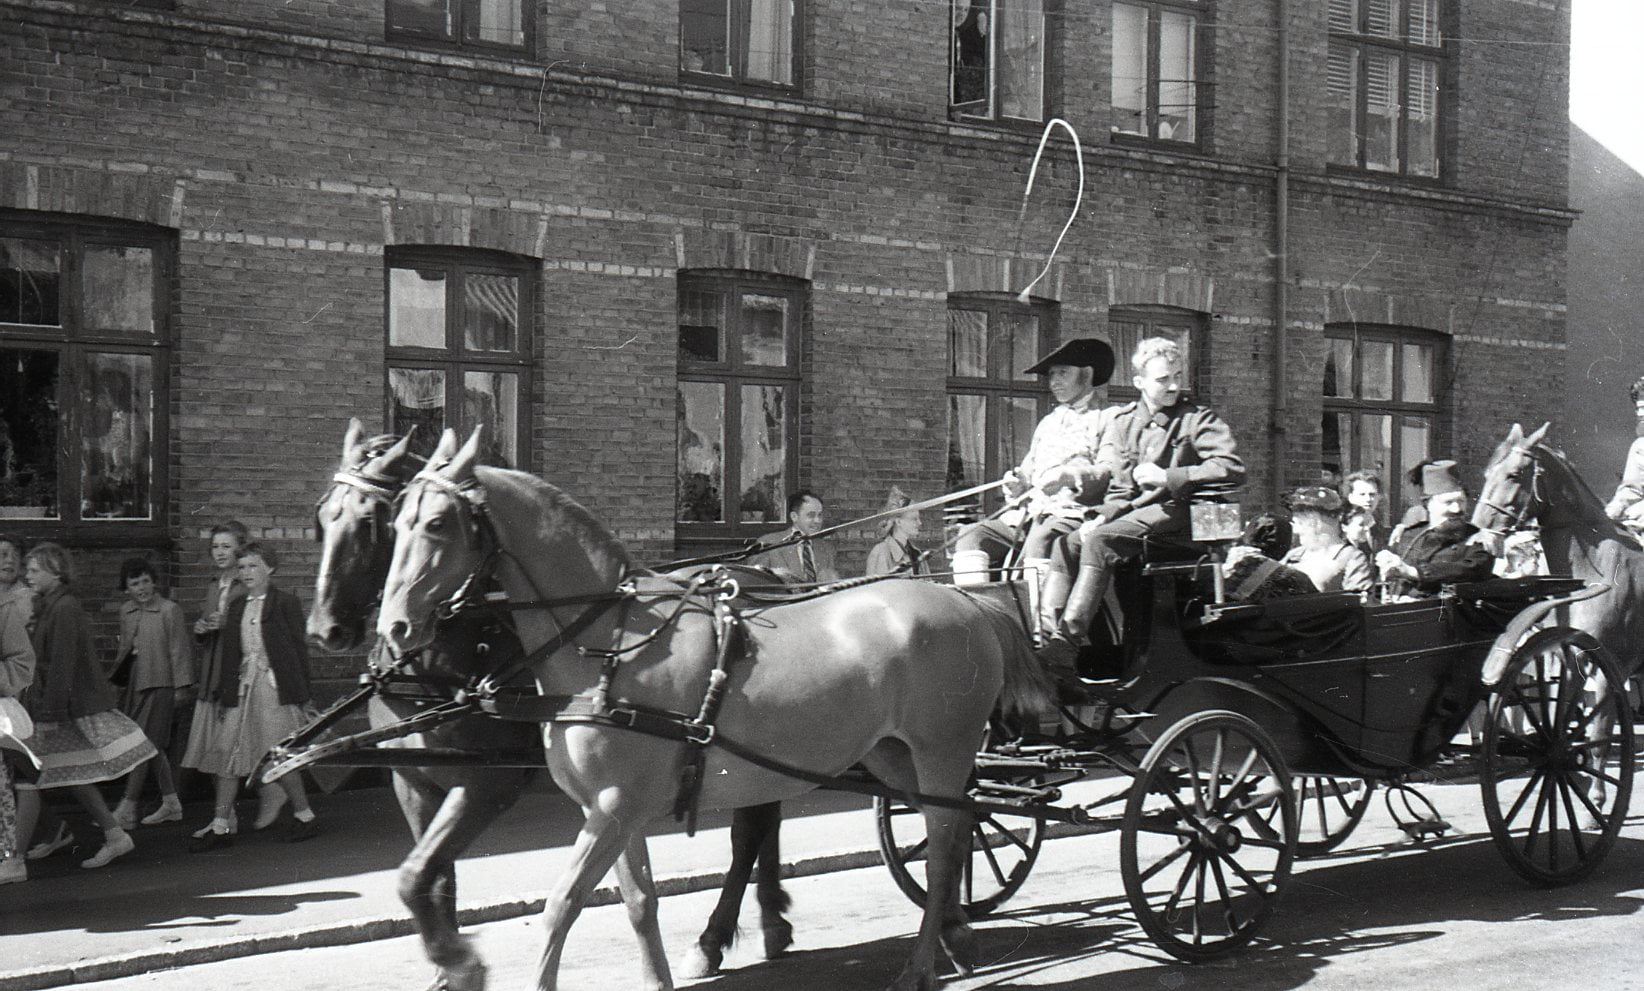 100.4.306  Byfest, Jernbanegade cirka 1955